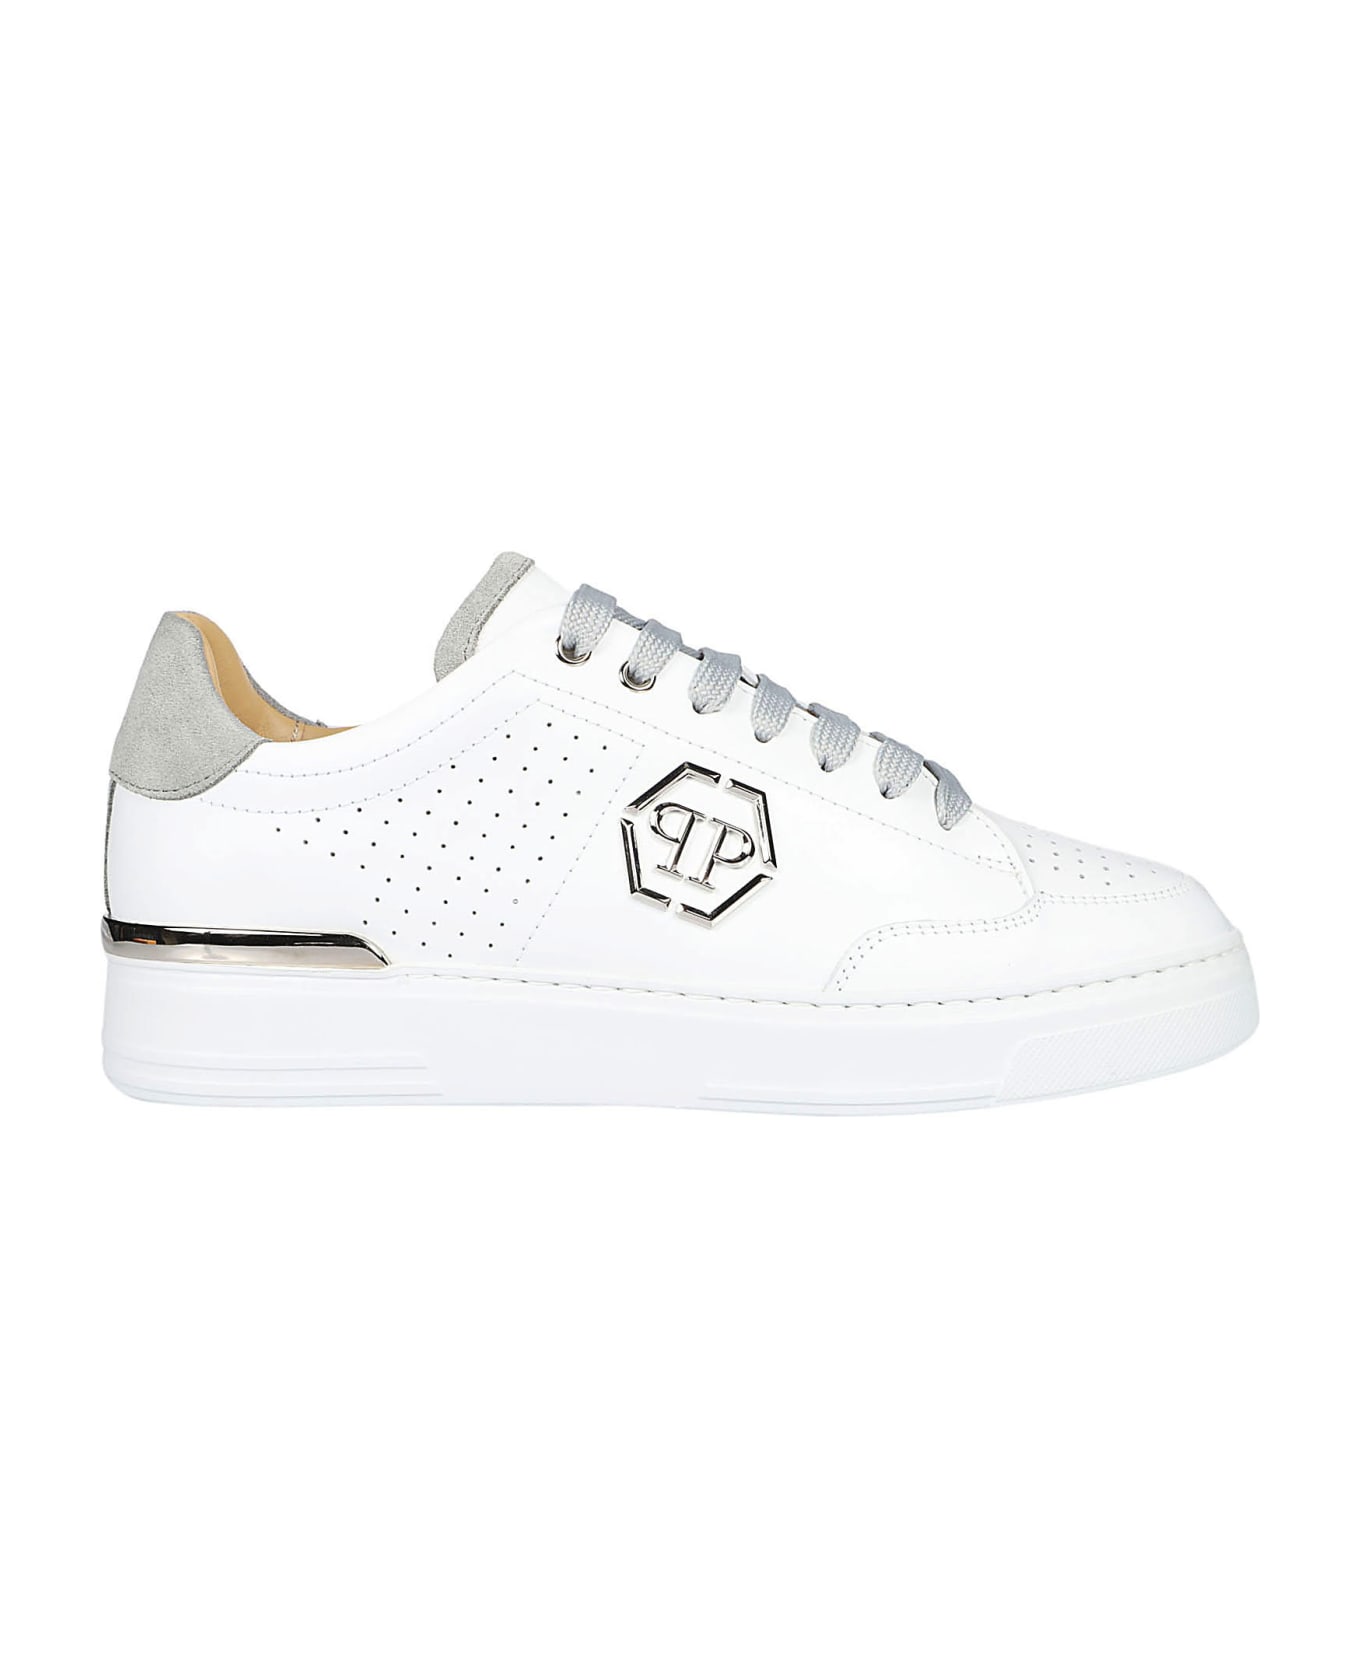 Philipp Plein Low Top Sneakers - White/grey